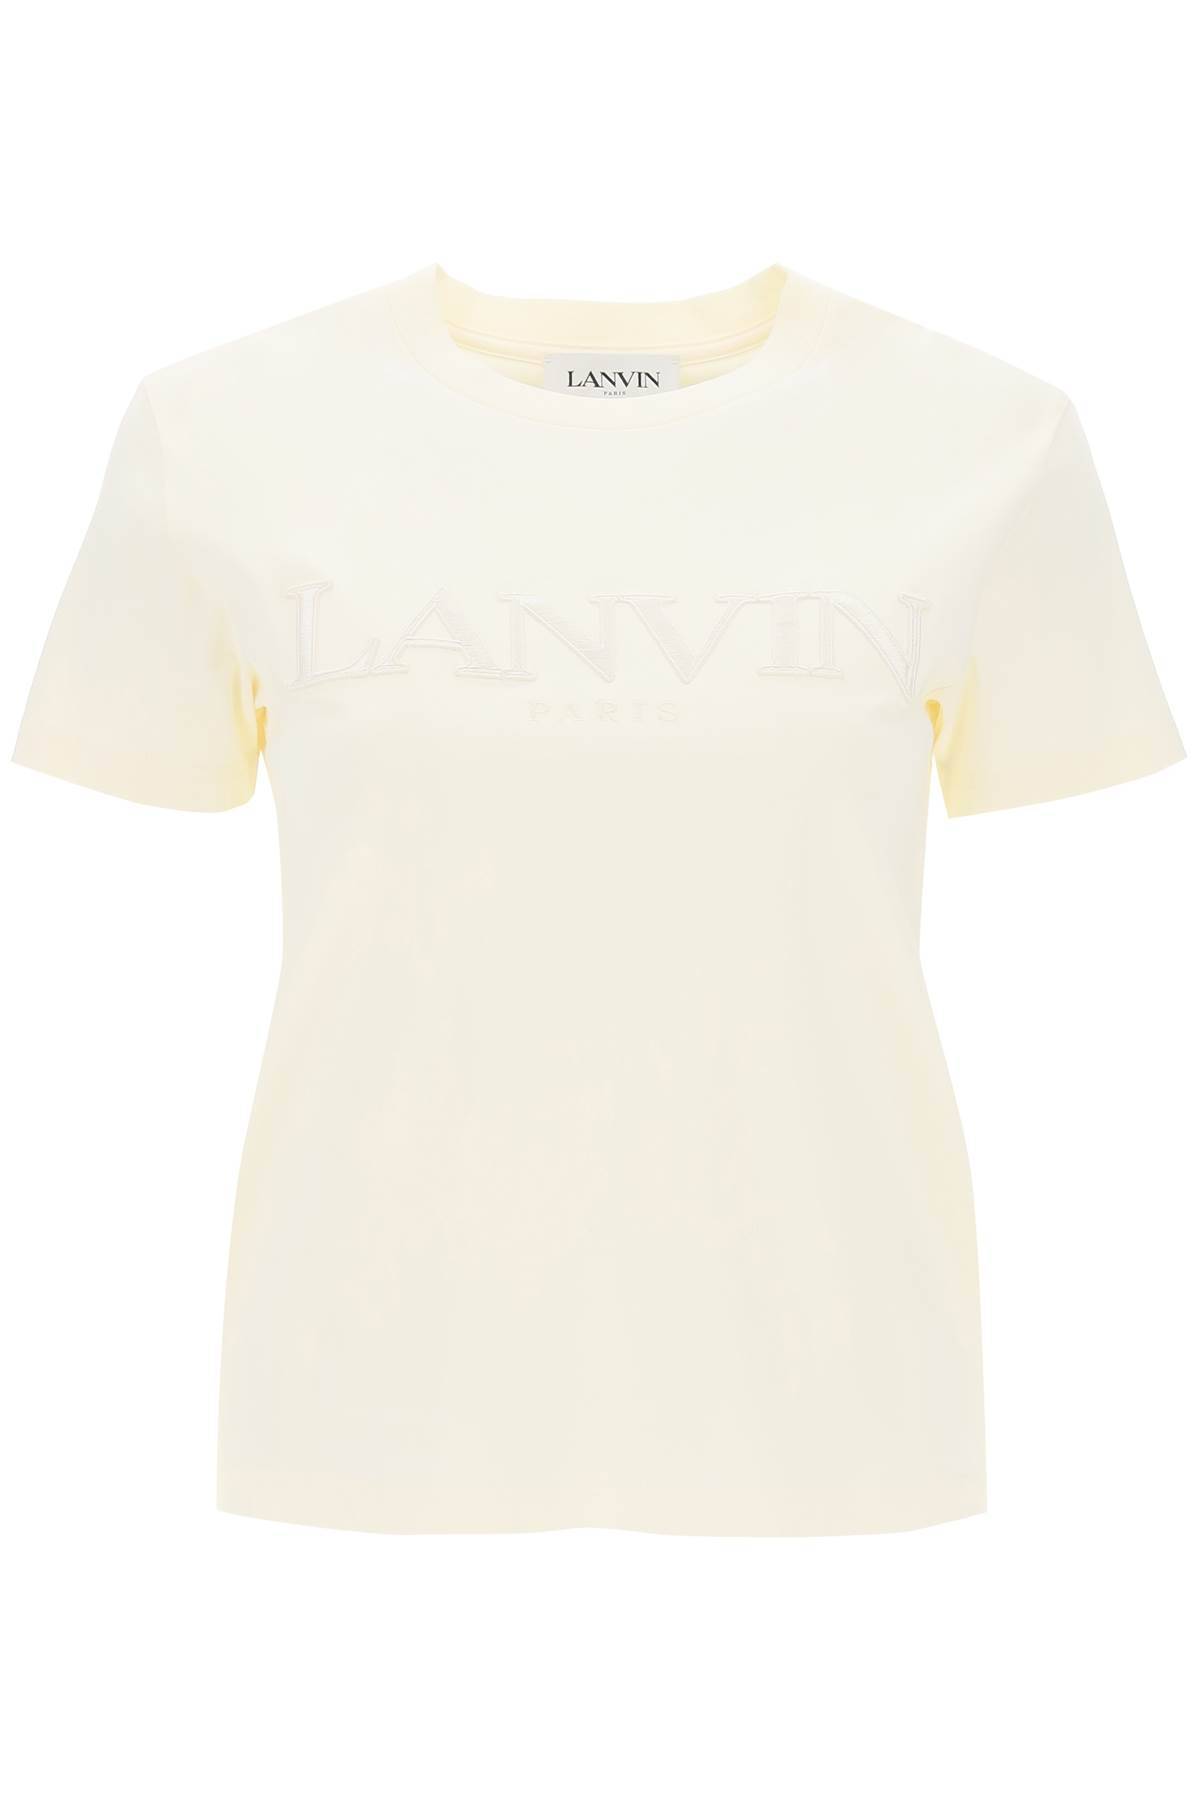 Lanvin LANVIN logo embroidered t-shirt